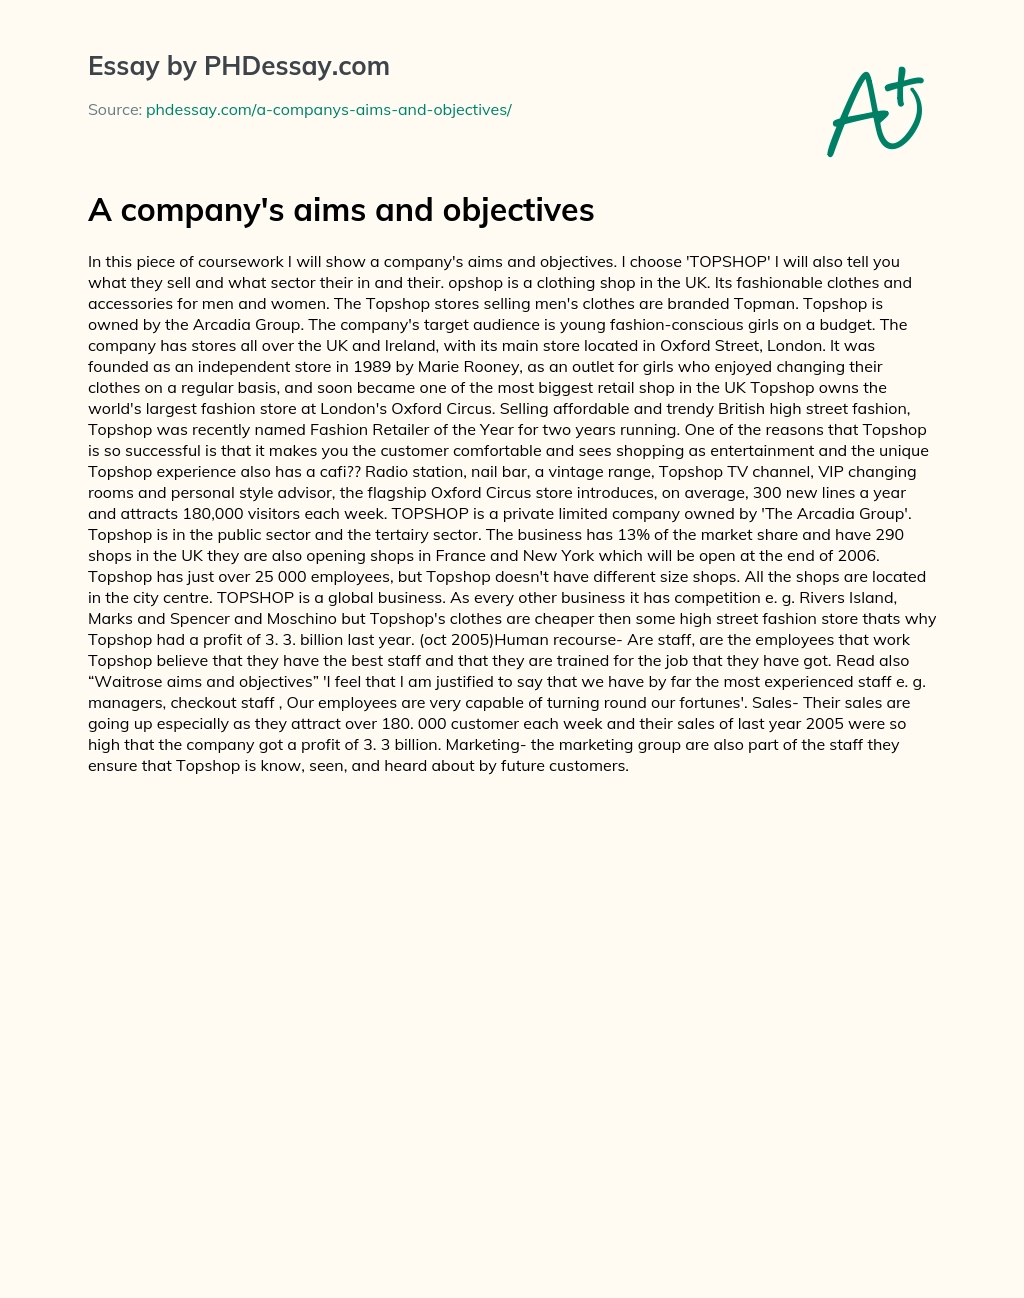 A company’s aims and objectives essay